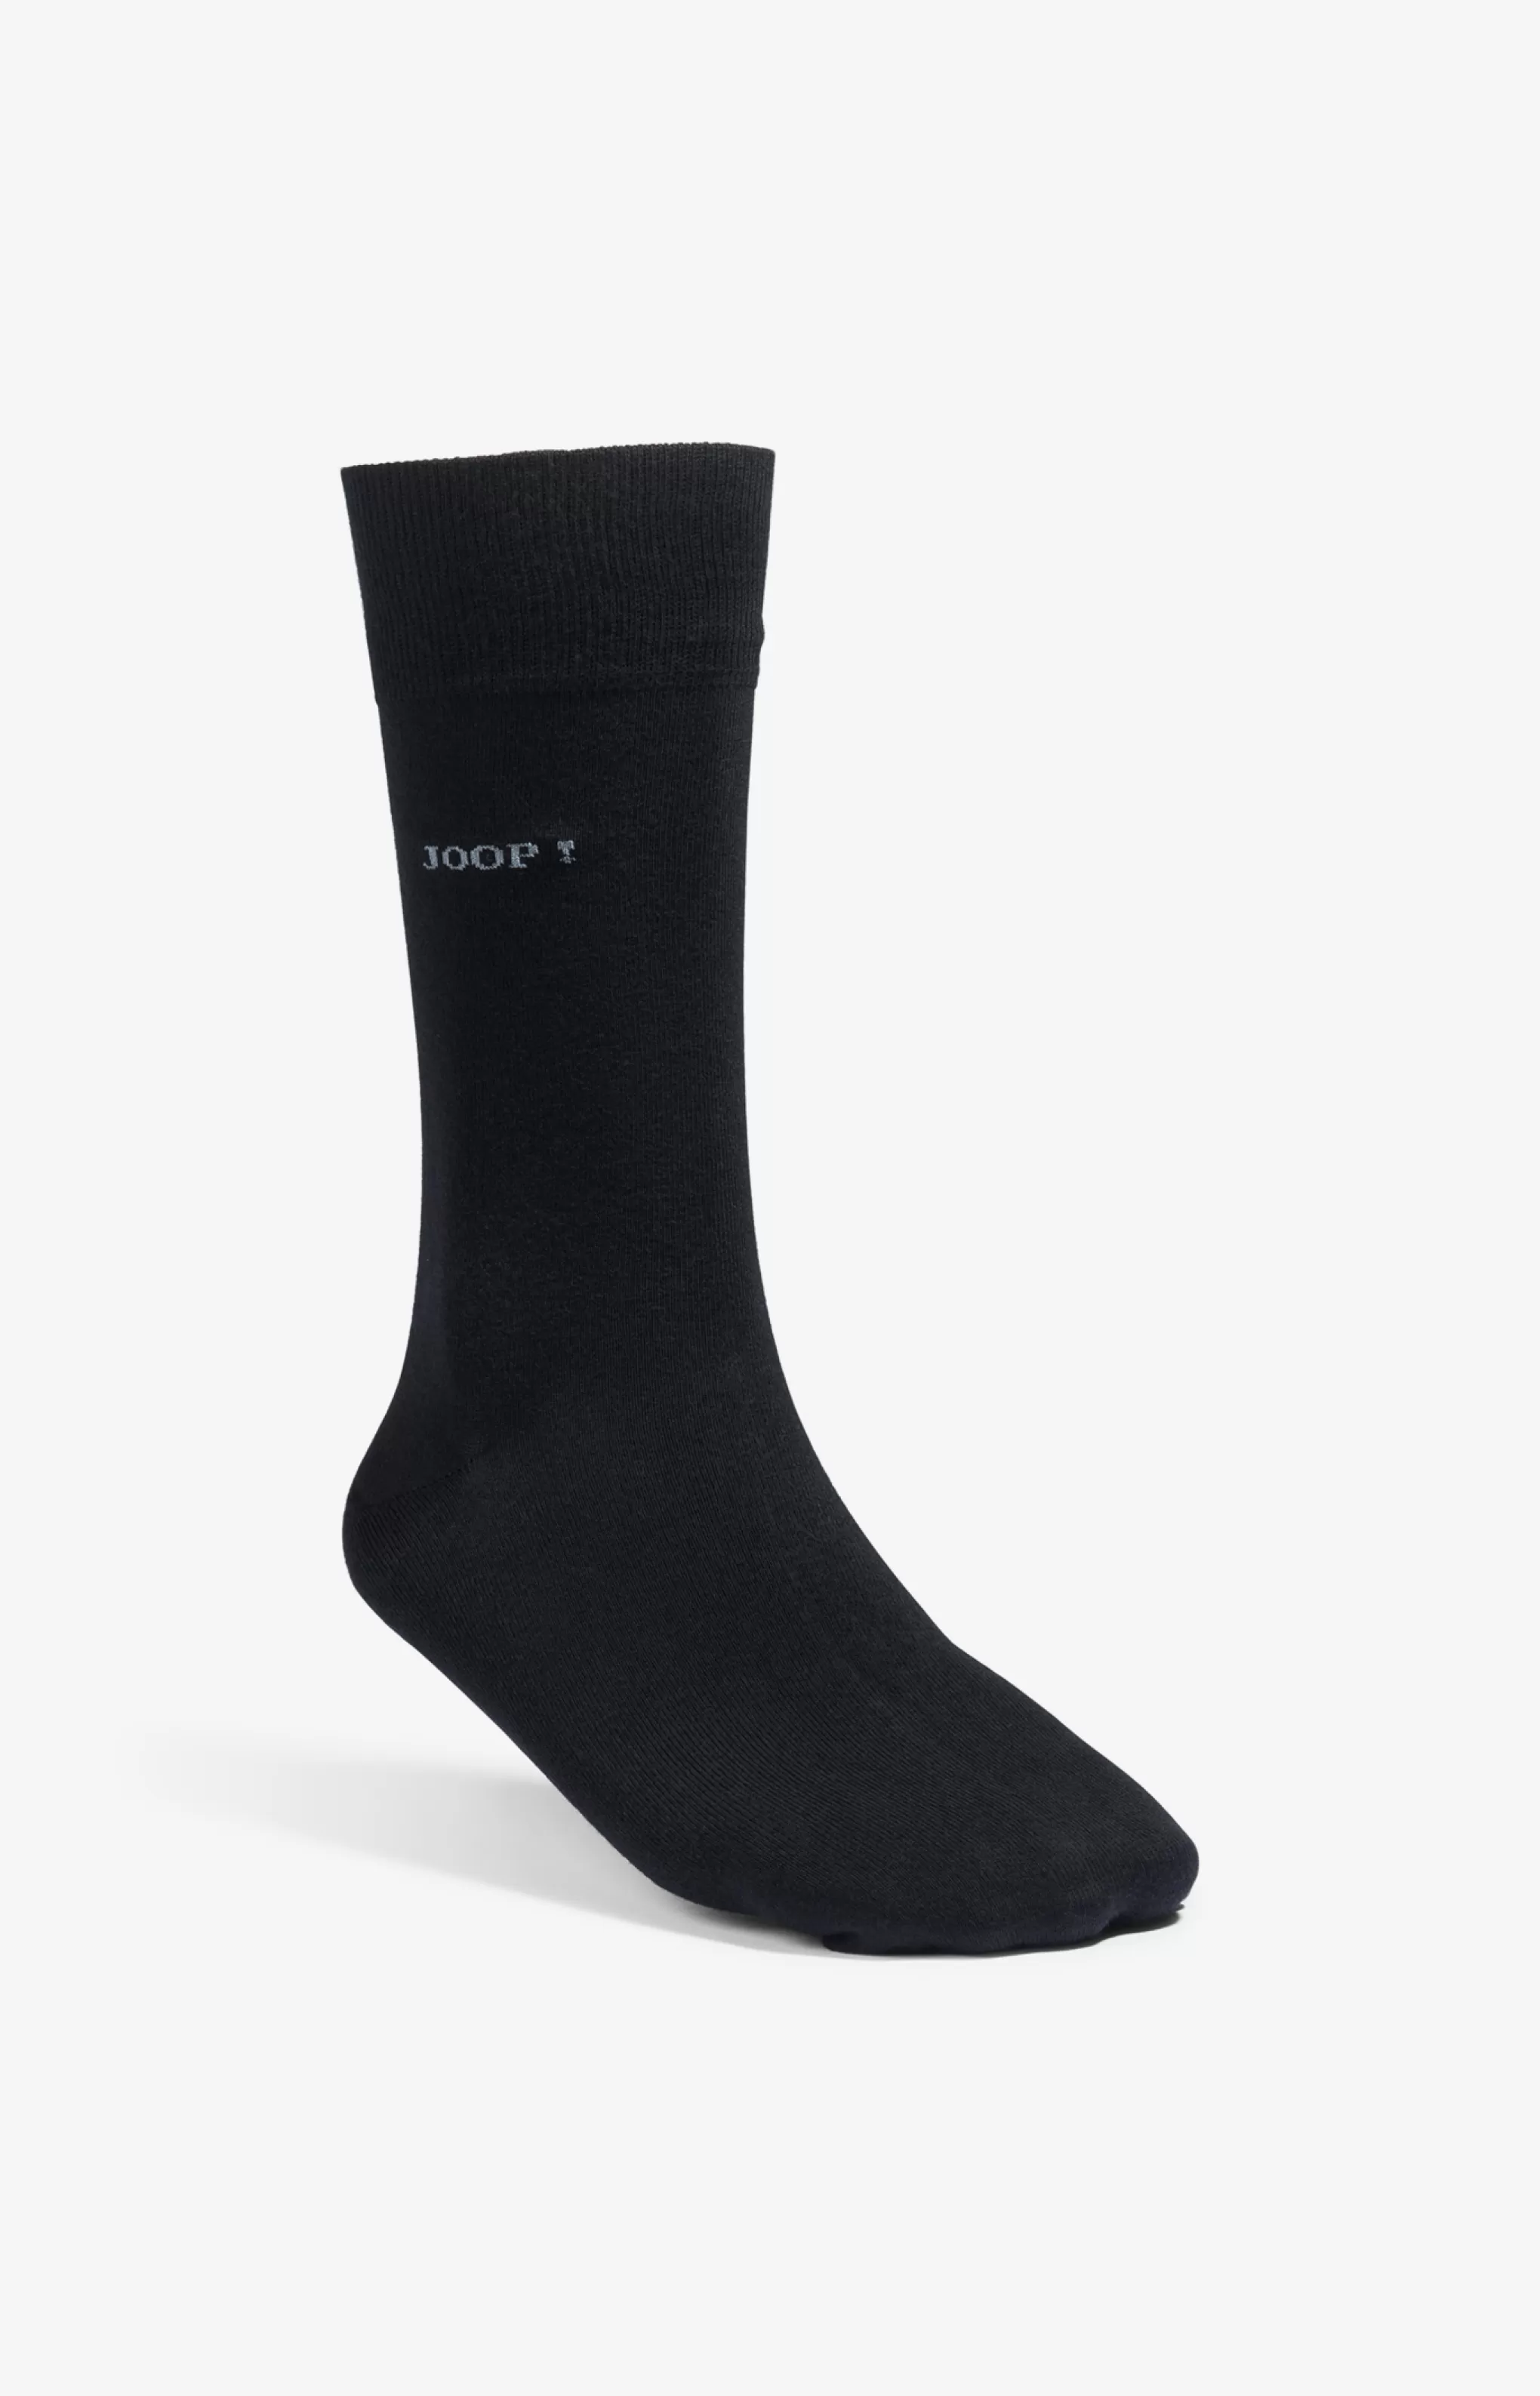 Socks*JOOP Socks 2-pack finest organic cotton socks in Black